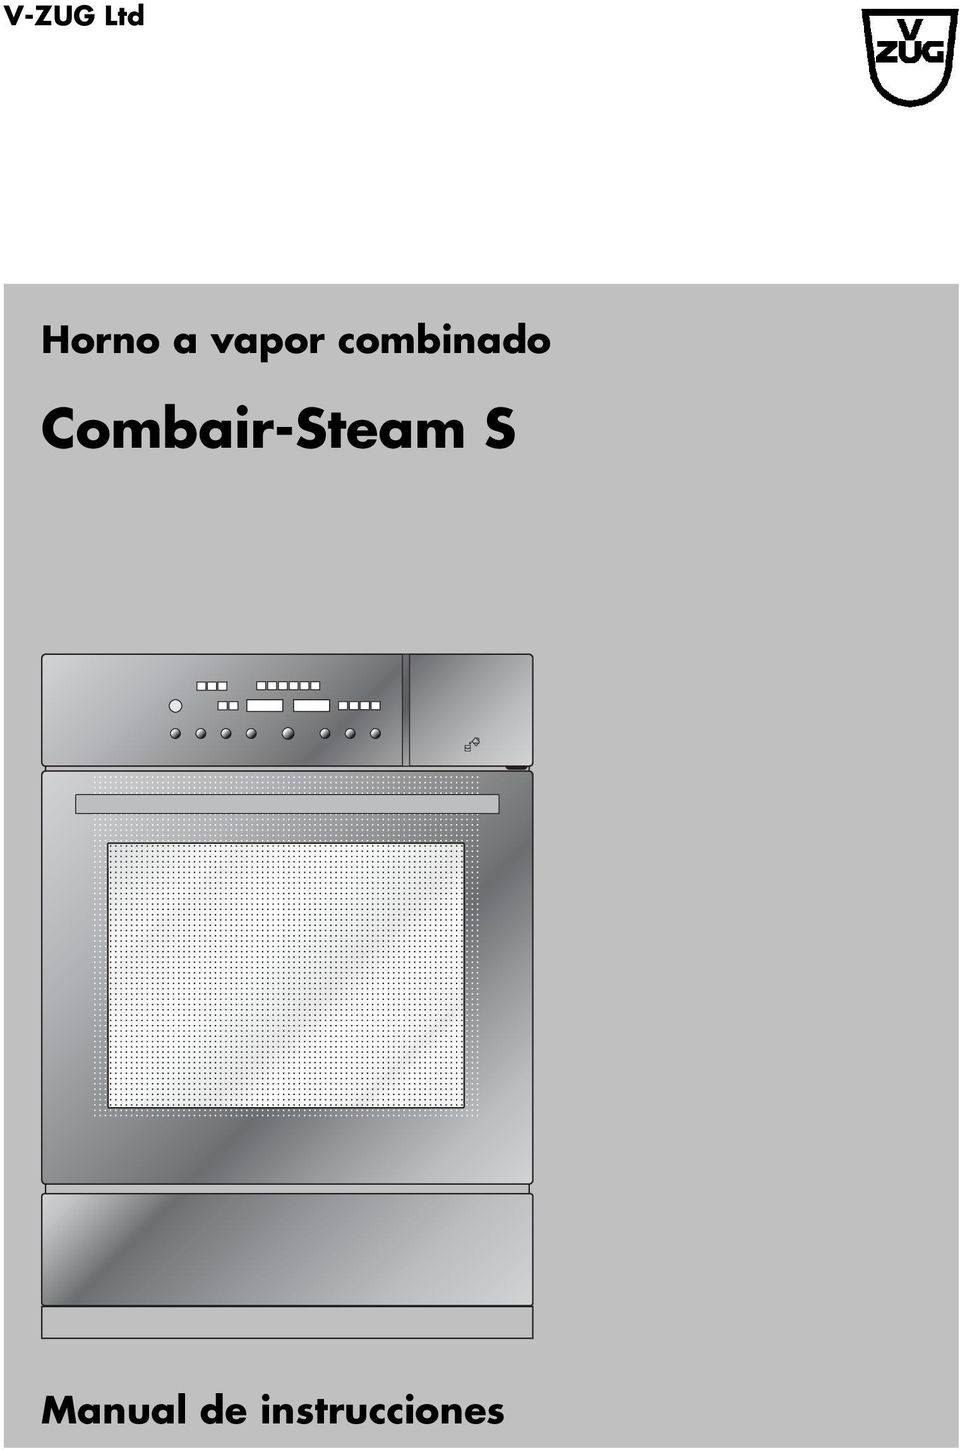 Combair-Steam S